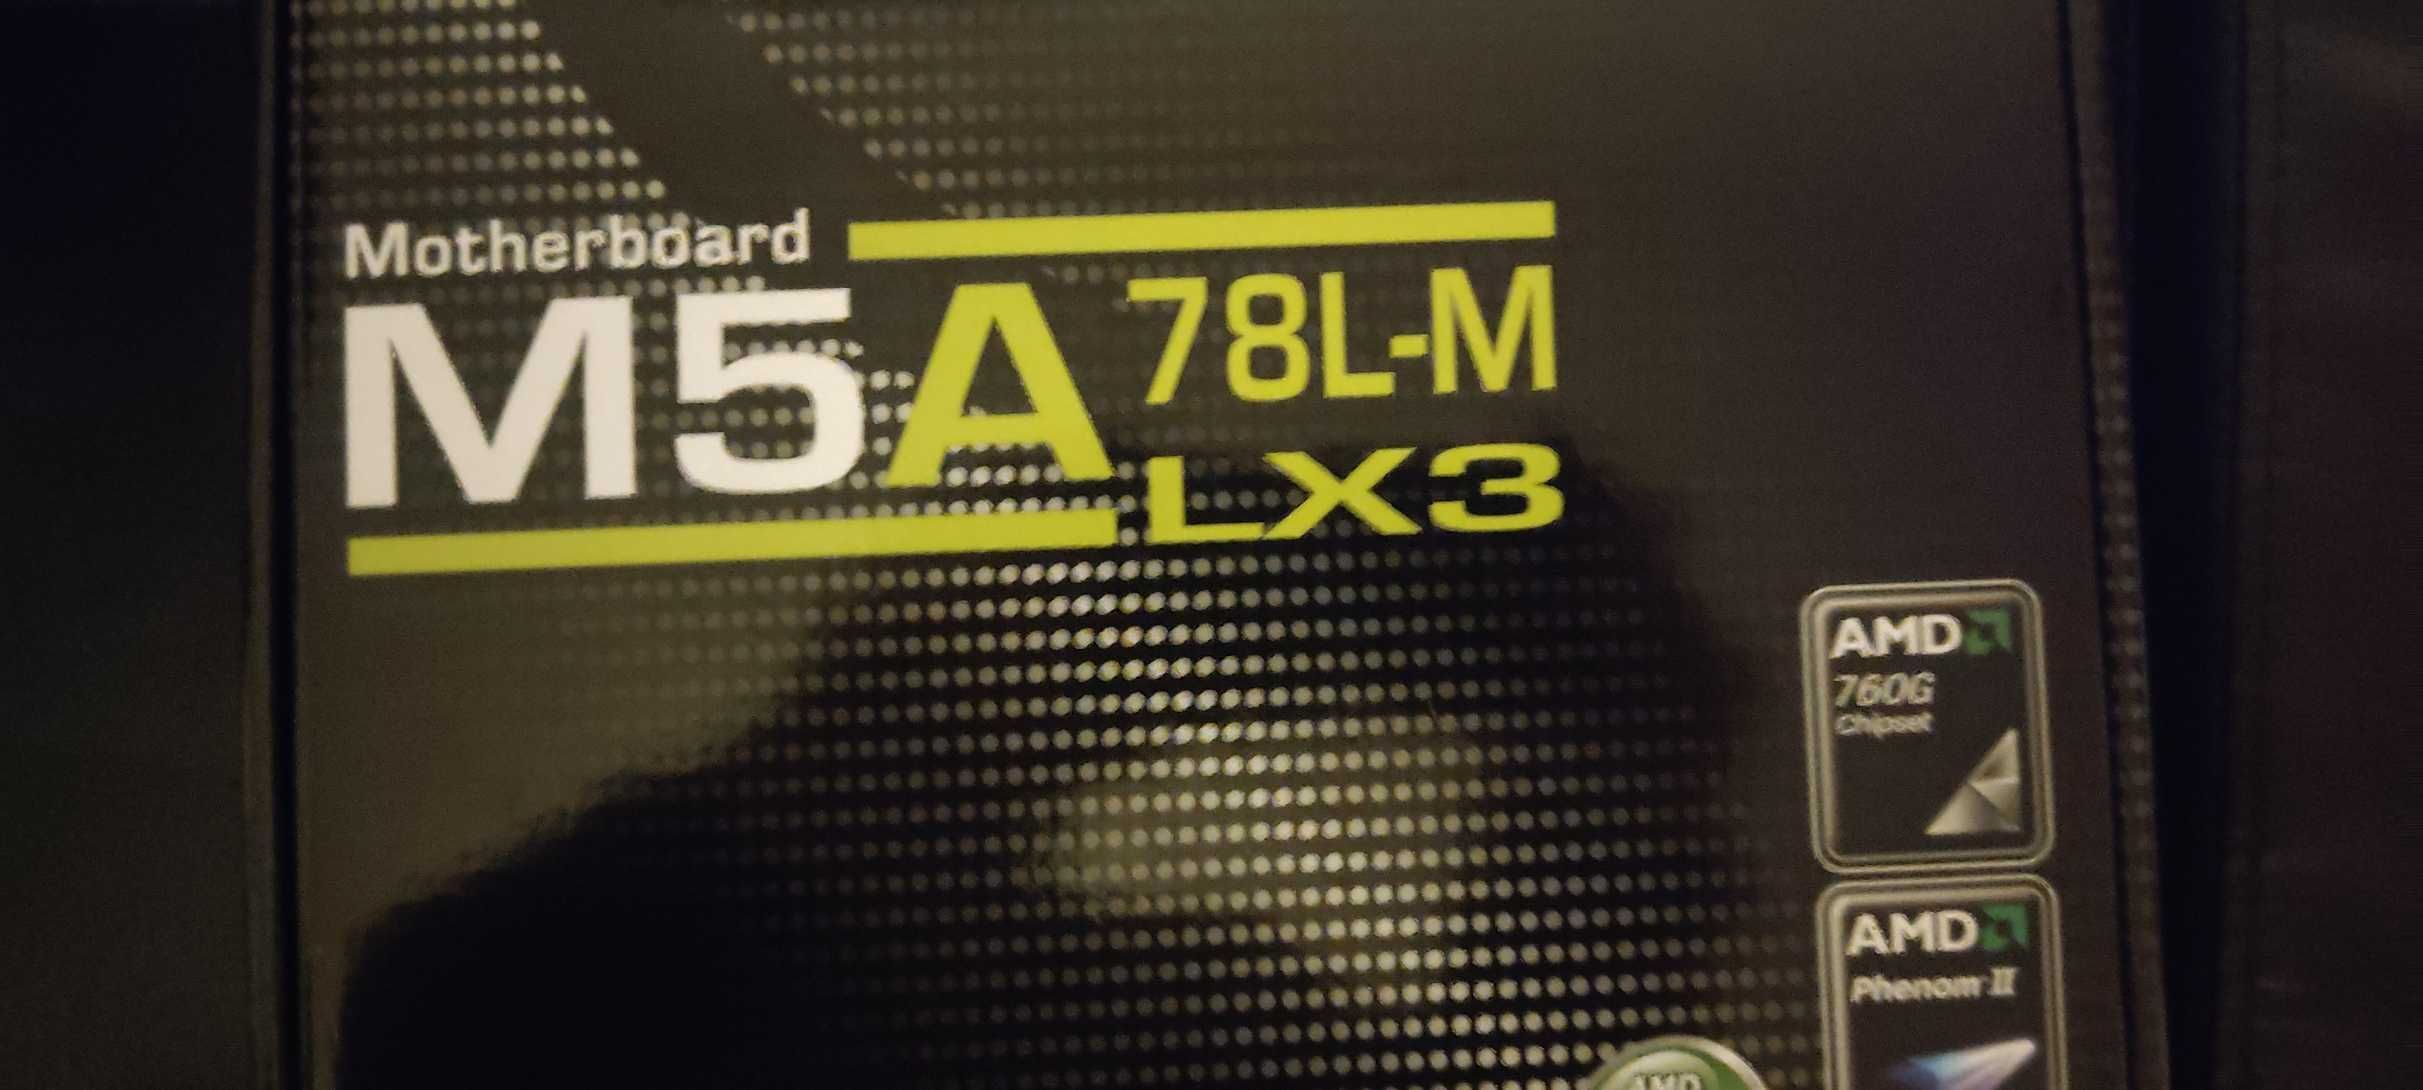 Motherboard para AMD Socket AM3  da Asus M 5A  78L-MLX3